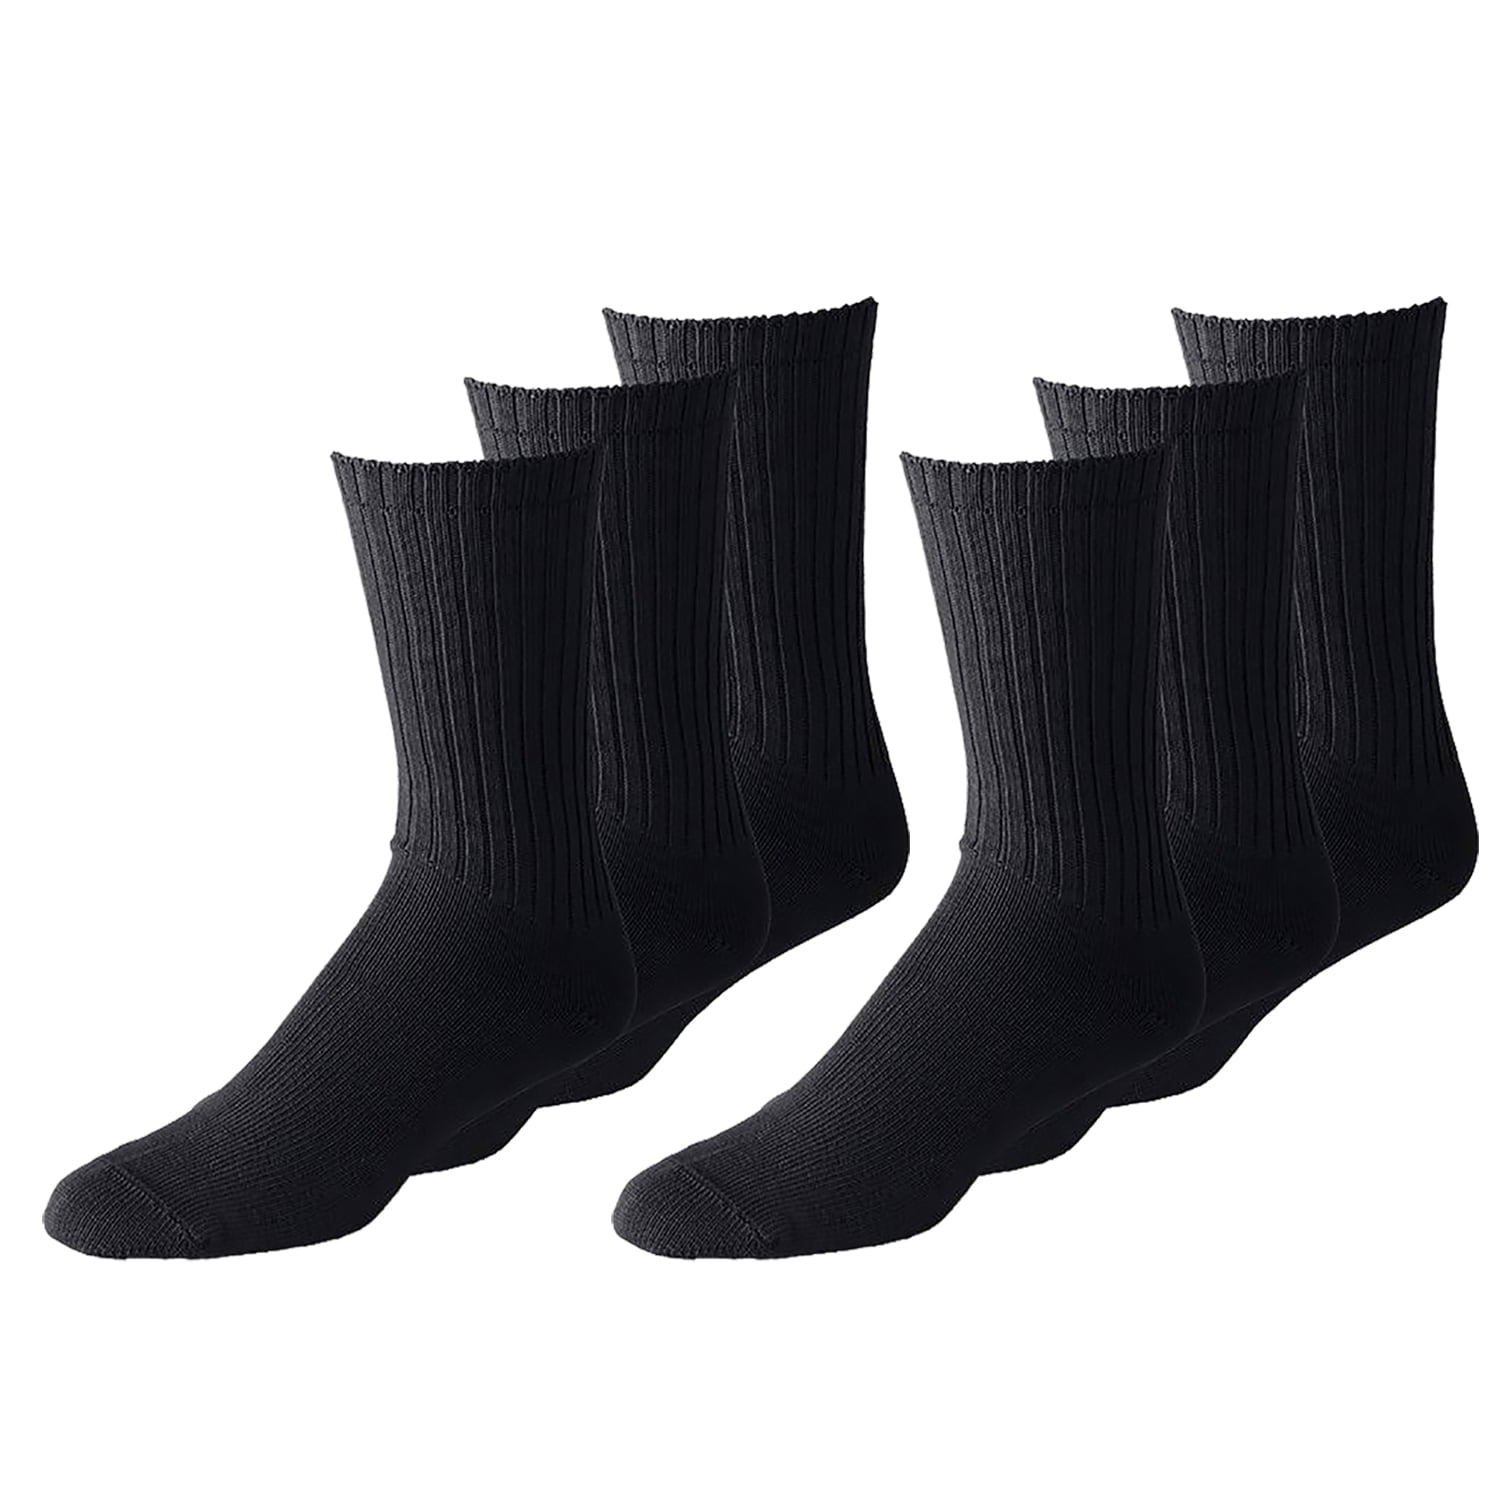 Wholesale Bulk Lots Men Women Crew Socks Sports Casual Cotton Size 9-11-10-13 